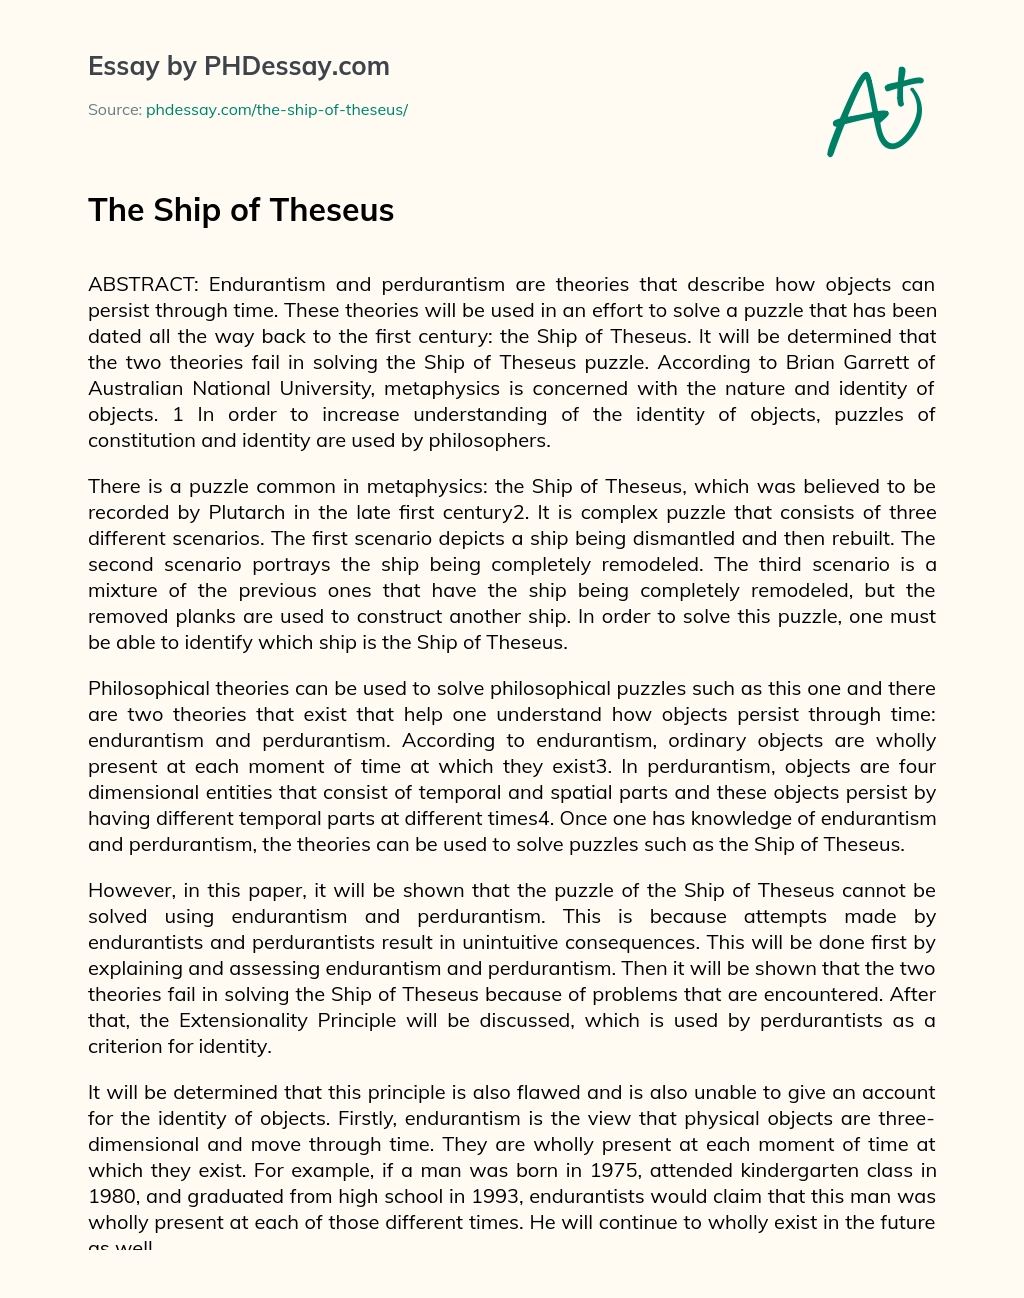 The Ship of Theseus essay